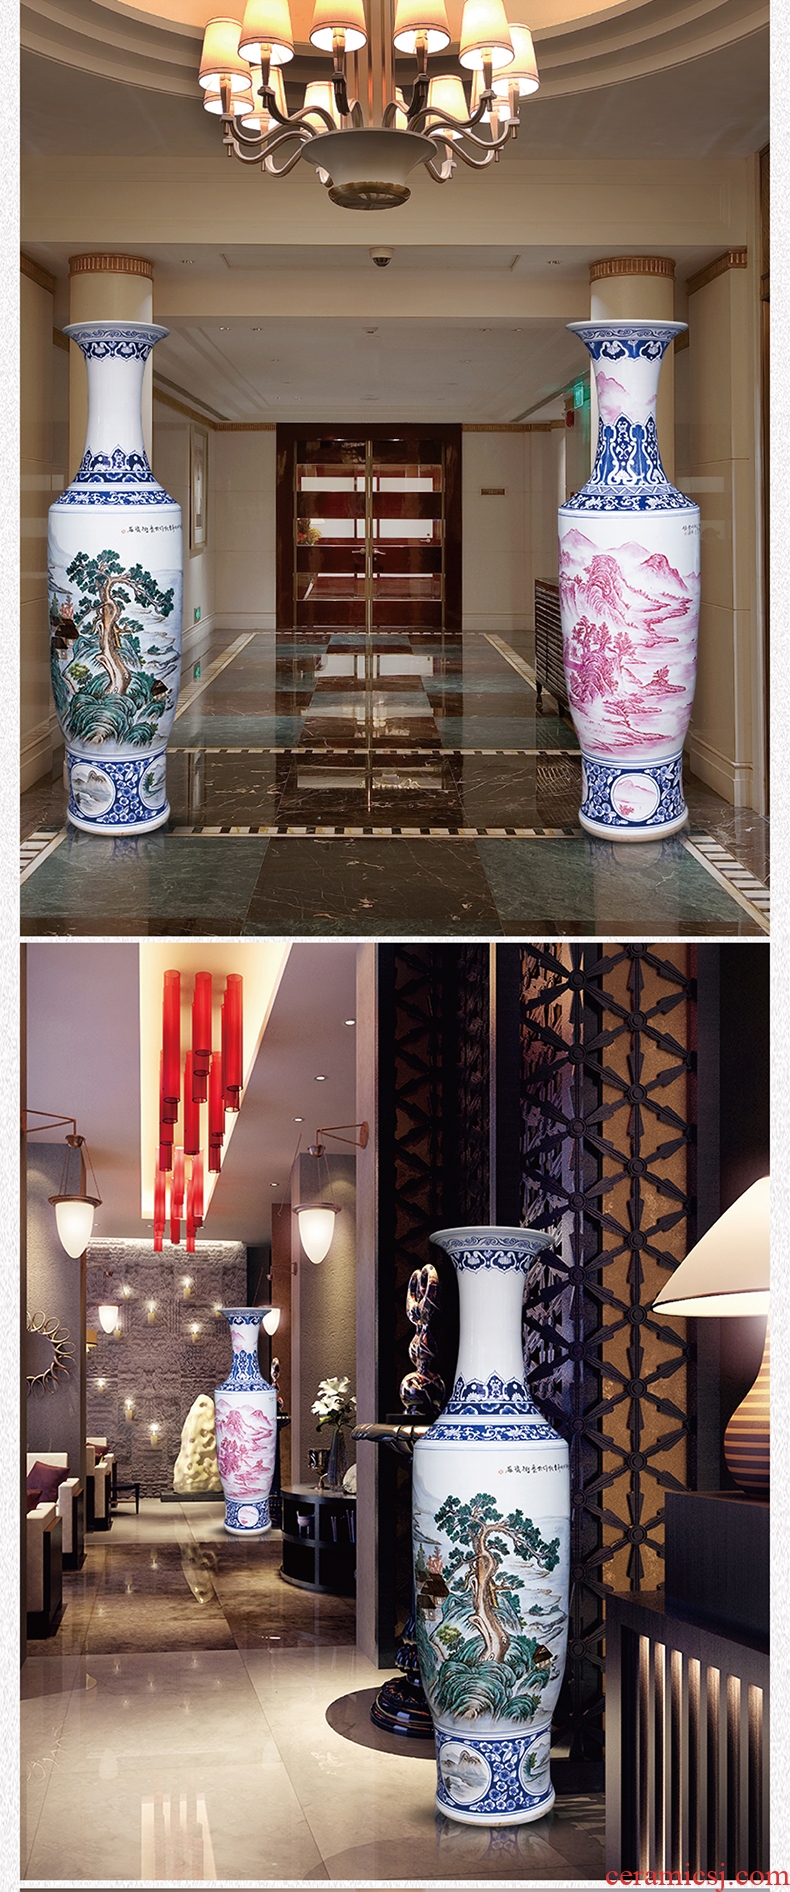 American light key-2 luxury new Chinese golden flower arranging large ceramic floor vase modern hotel home sitting room porch decoration - 598314981133